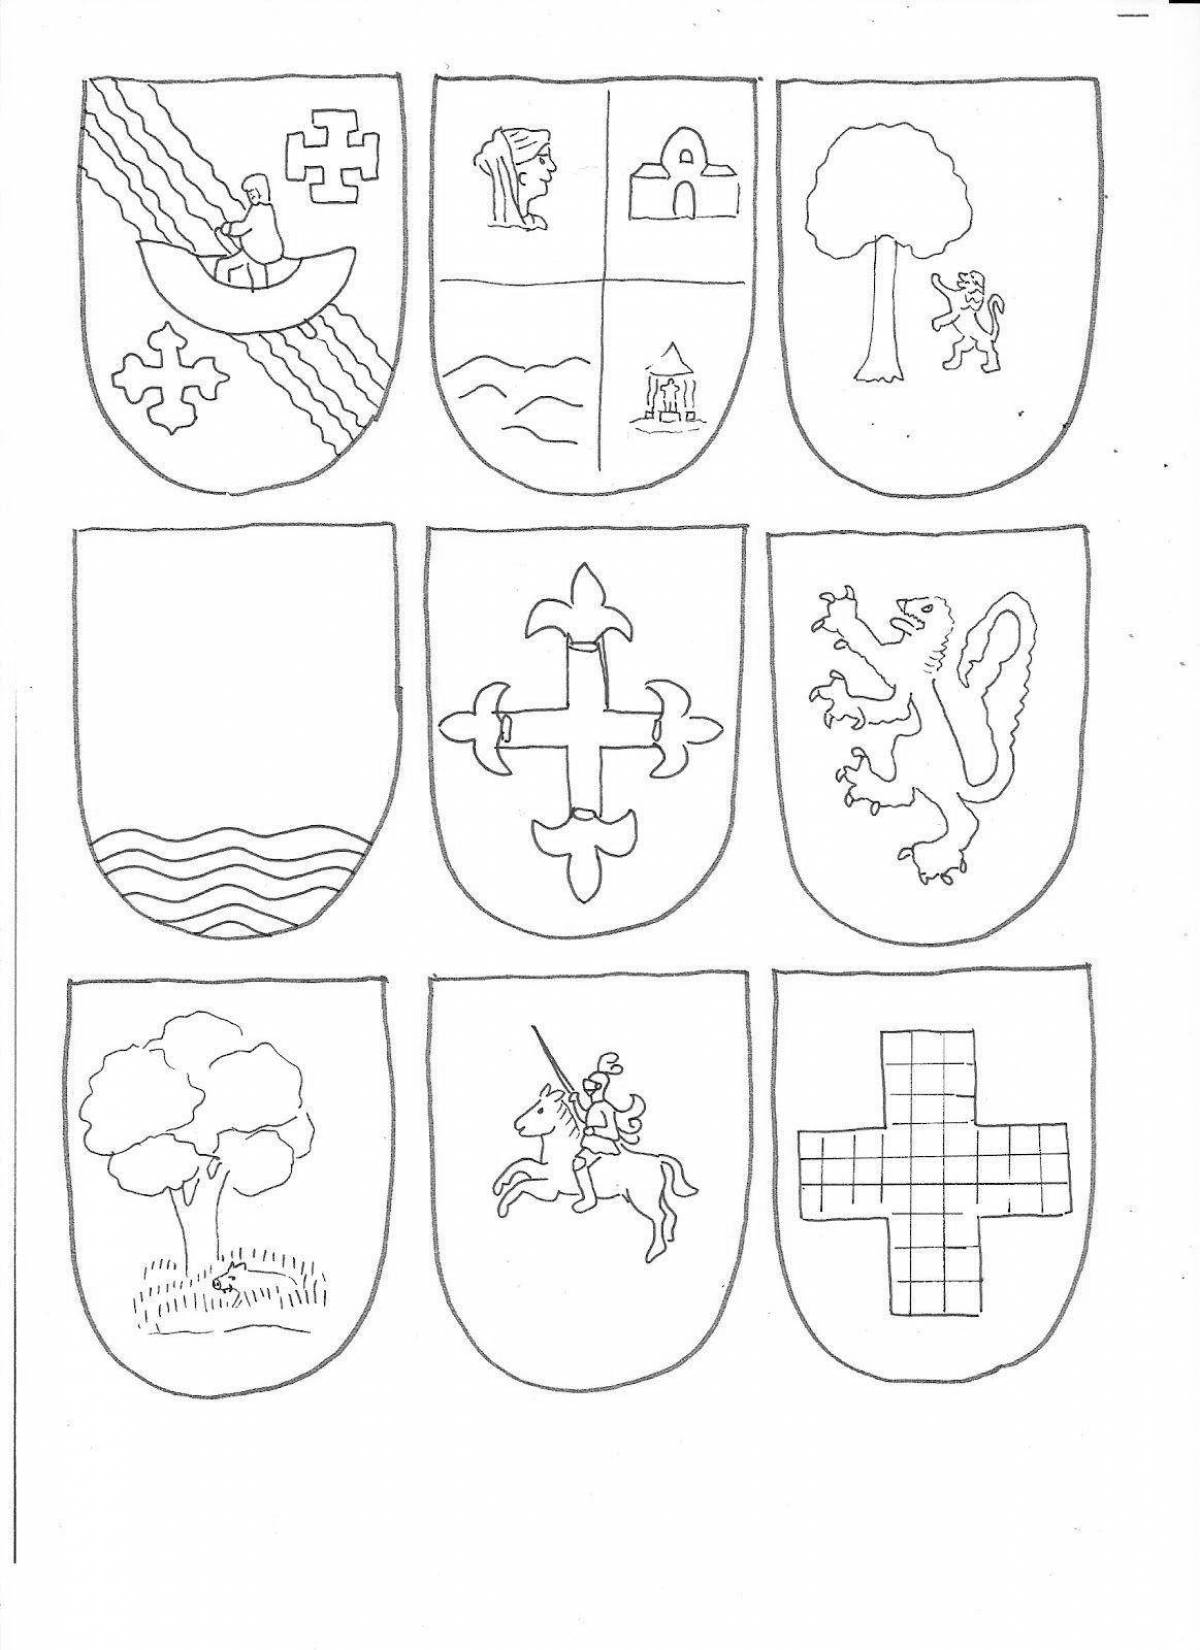 Coloring book grandeur coat of arms of a knight